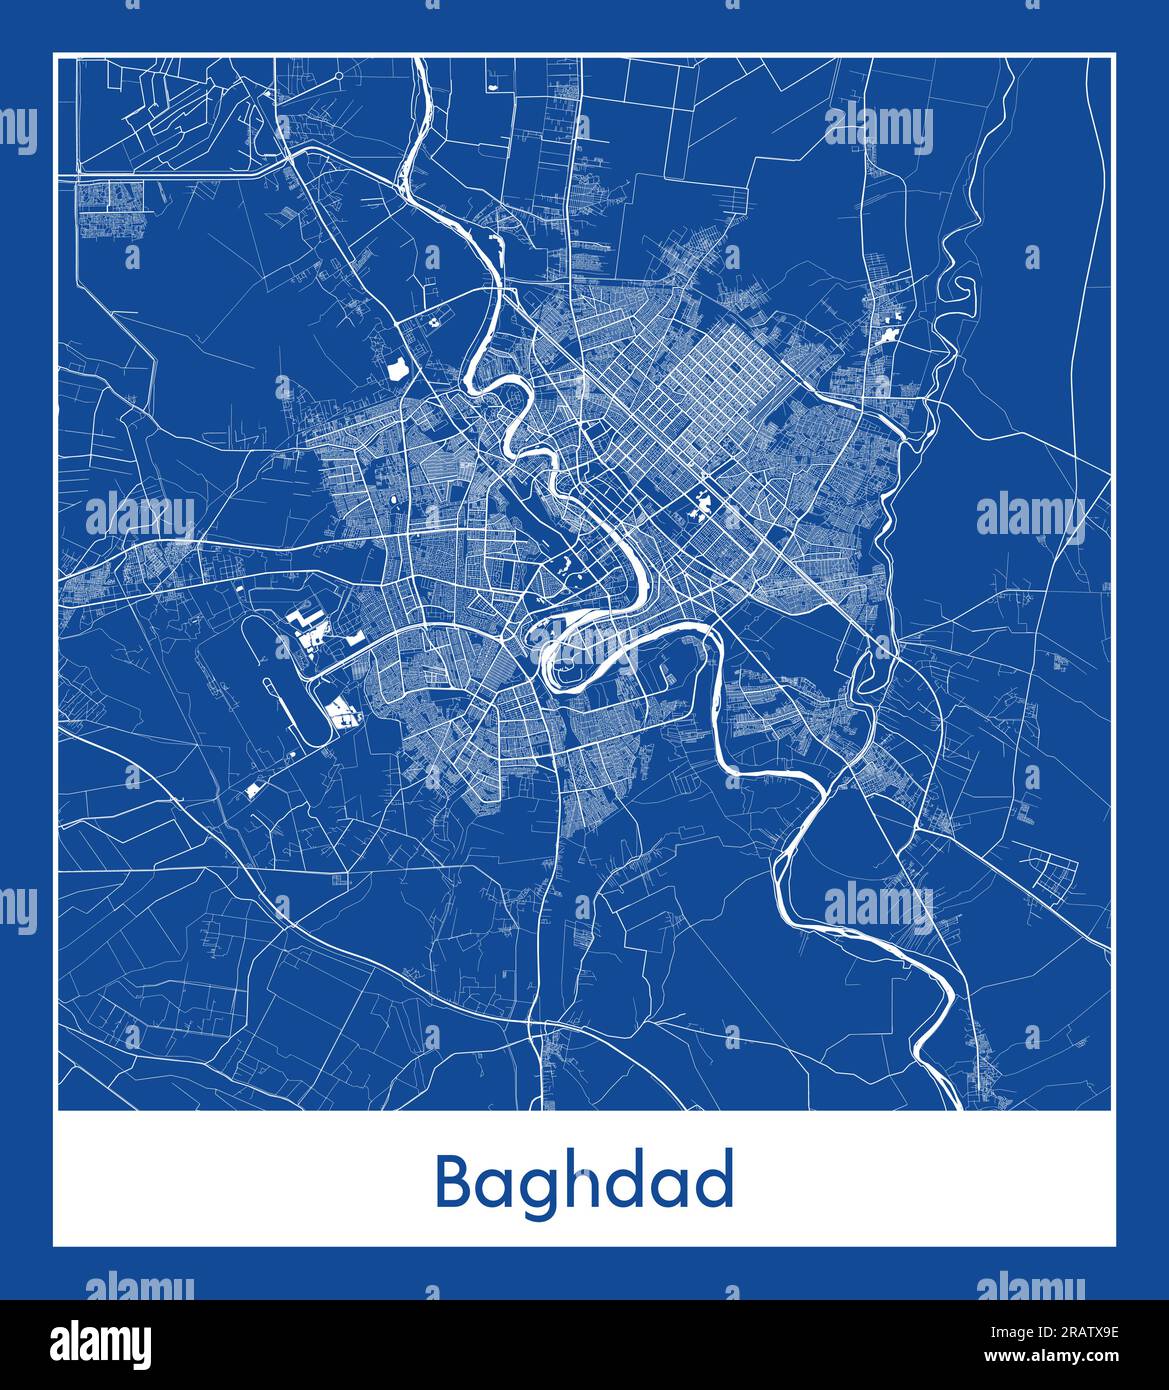 Baghdad Iraq Asia City map blue print vector illustration Stock Vector ...